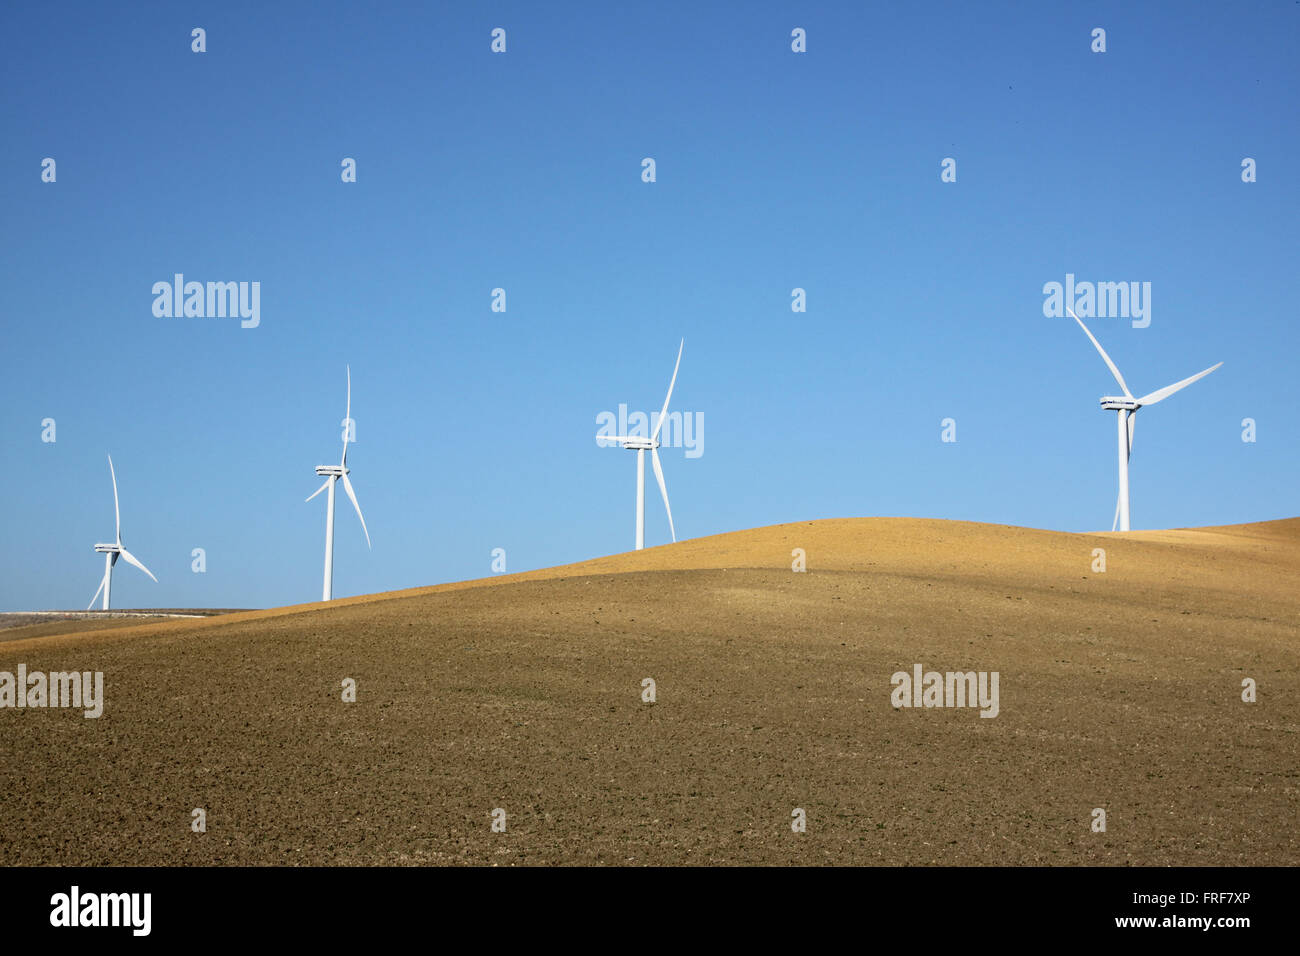 Andalusien, Spanien - 22.02.2012 - Spanien / Andalusien - Windmühle Felder - Sandrine Huet / Le Pictorium Stockfoto